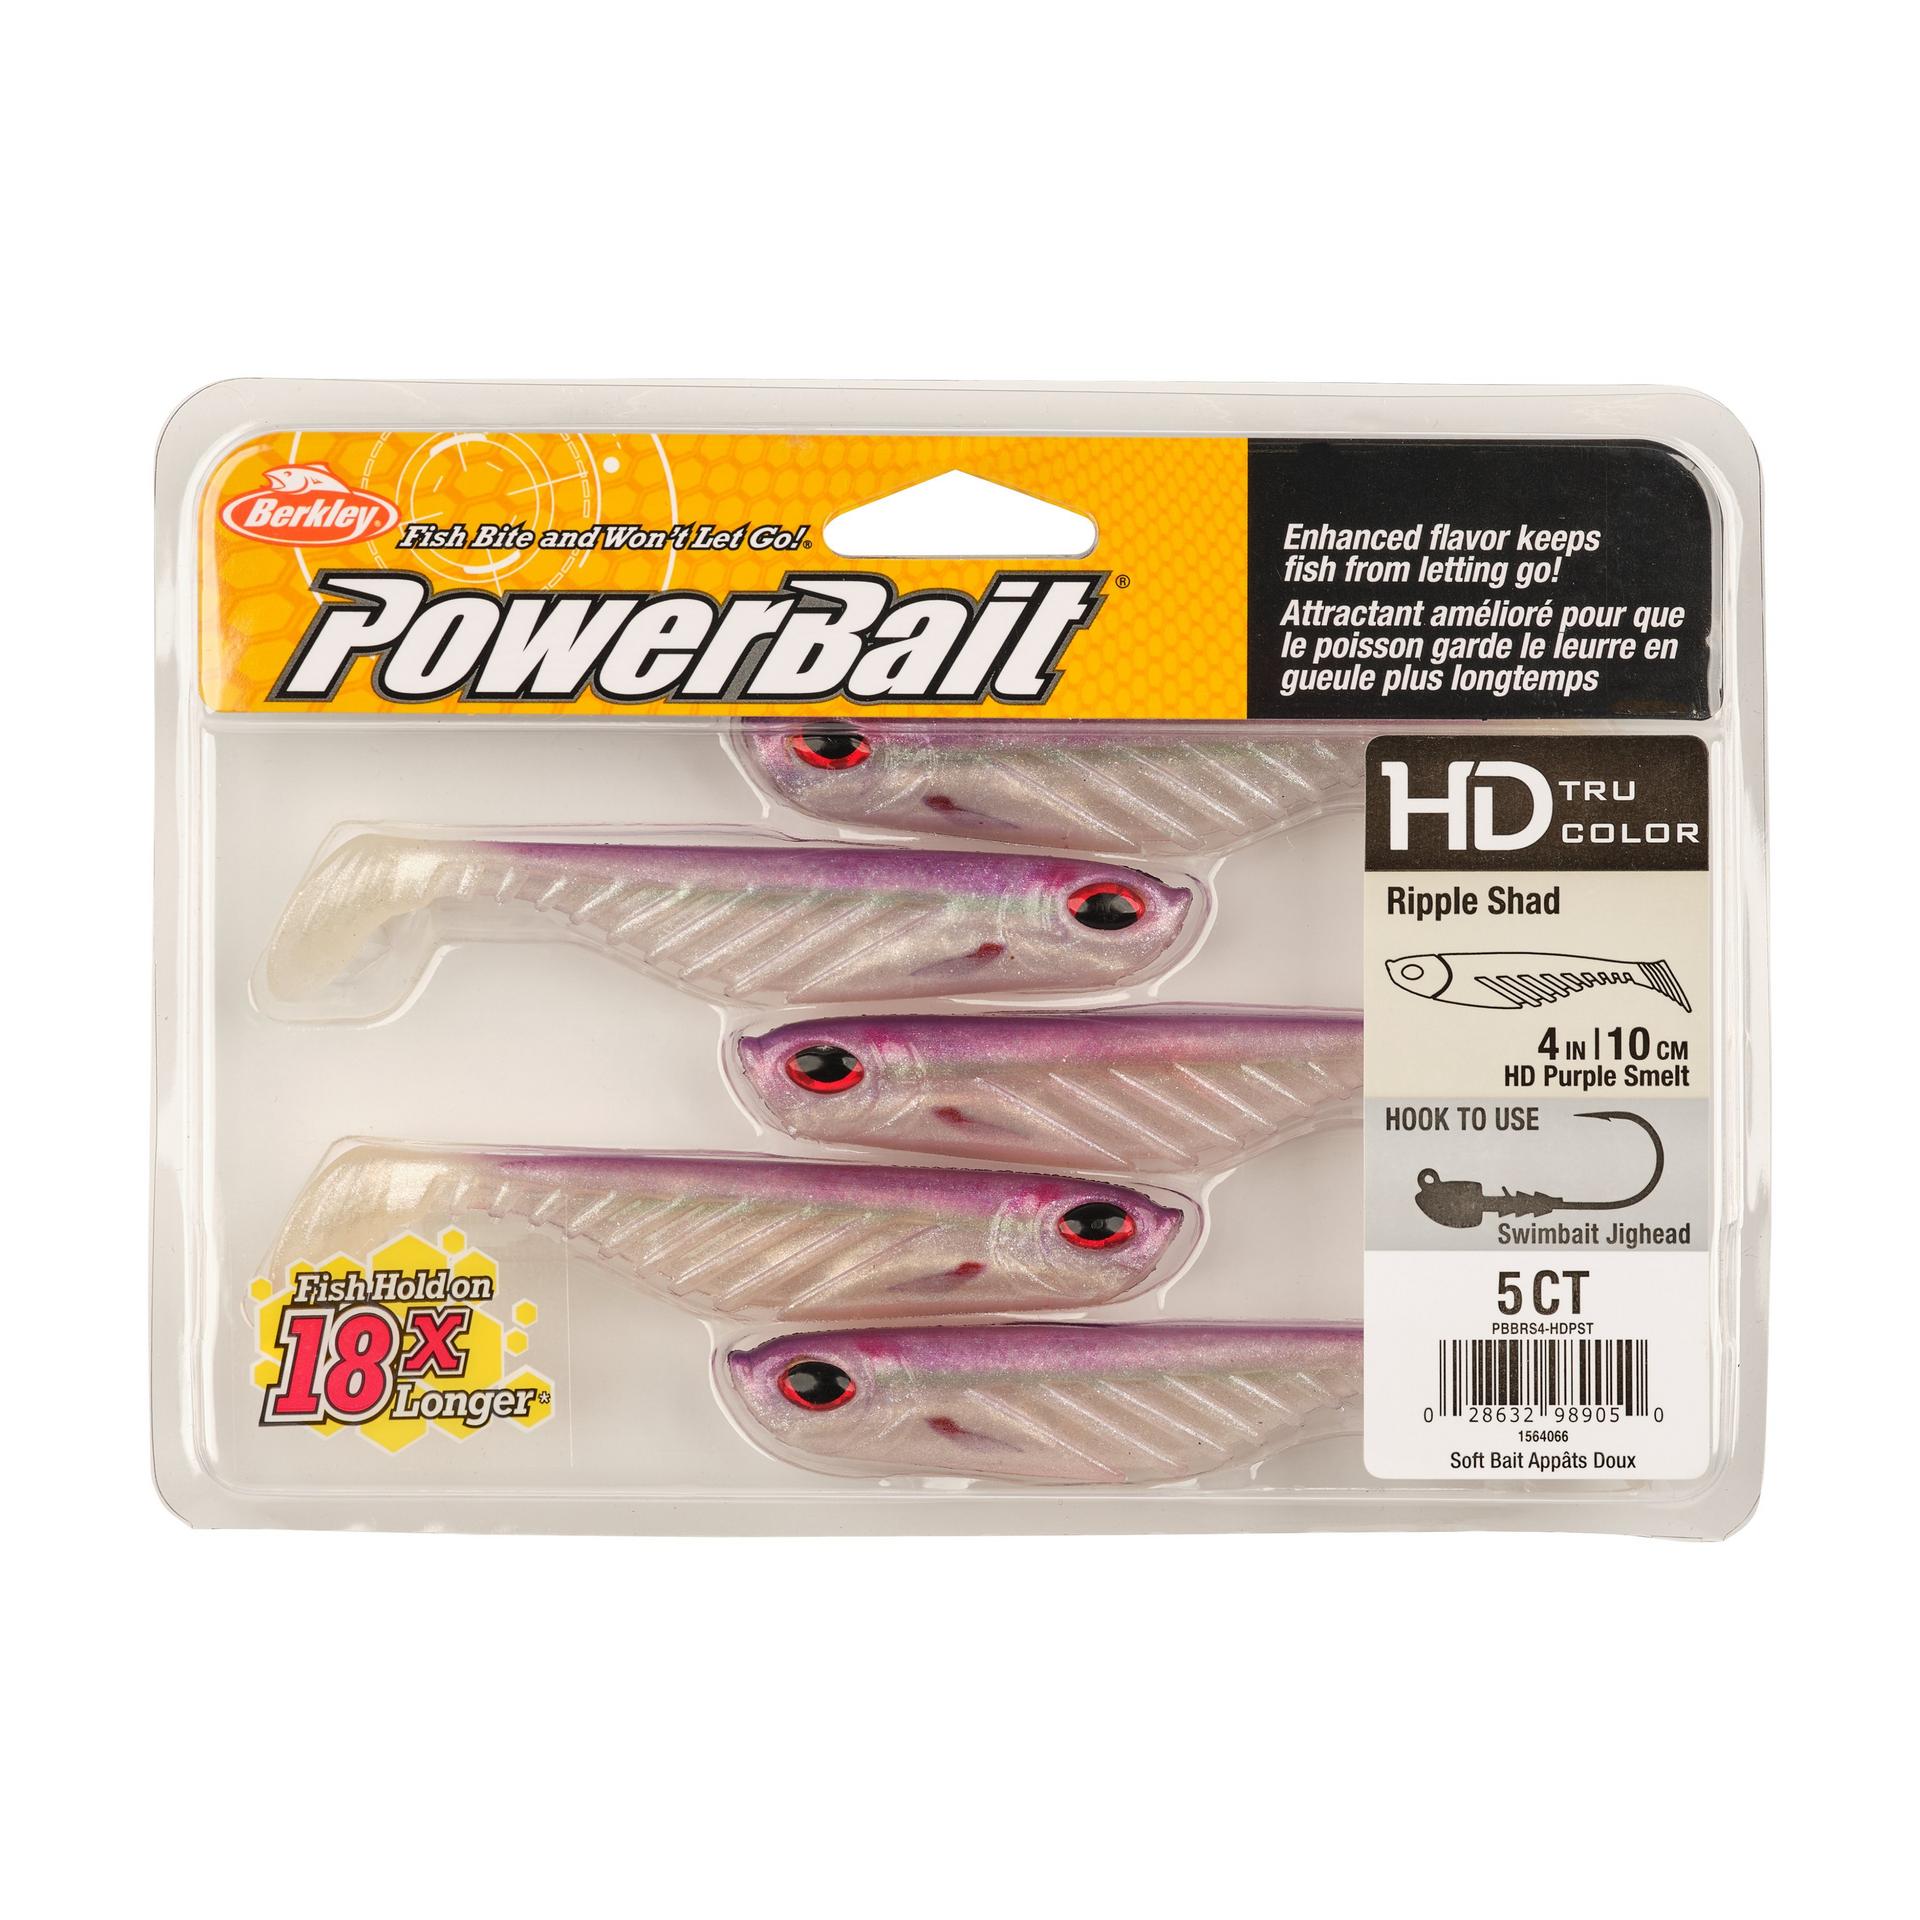 Berkley PowerBaitRippleShad 4in HDPurpleSmelt PKG | Berkley Fishing